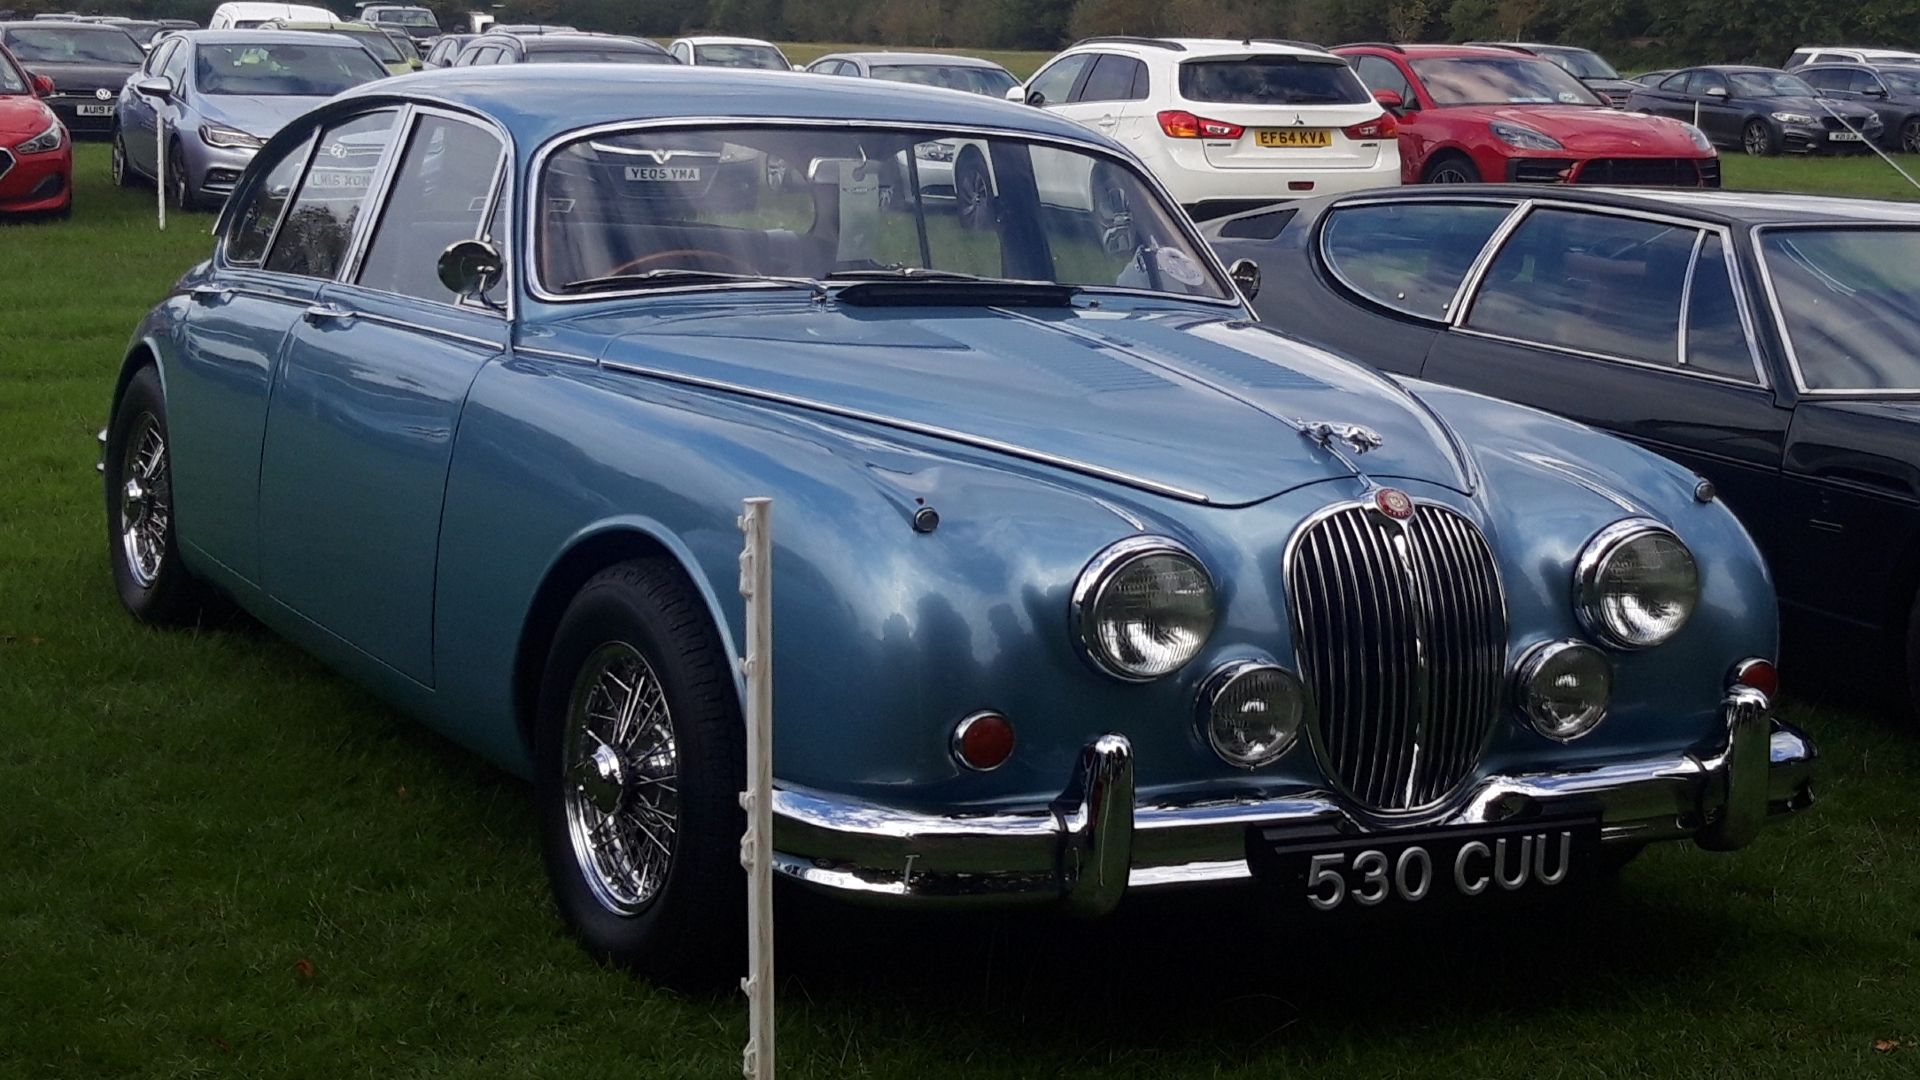 1961 Jaguar Mark II blue classic parked